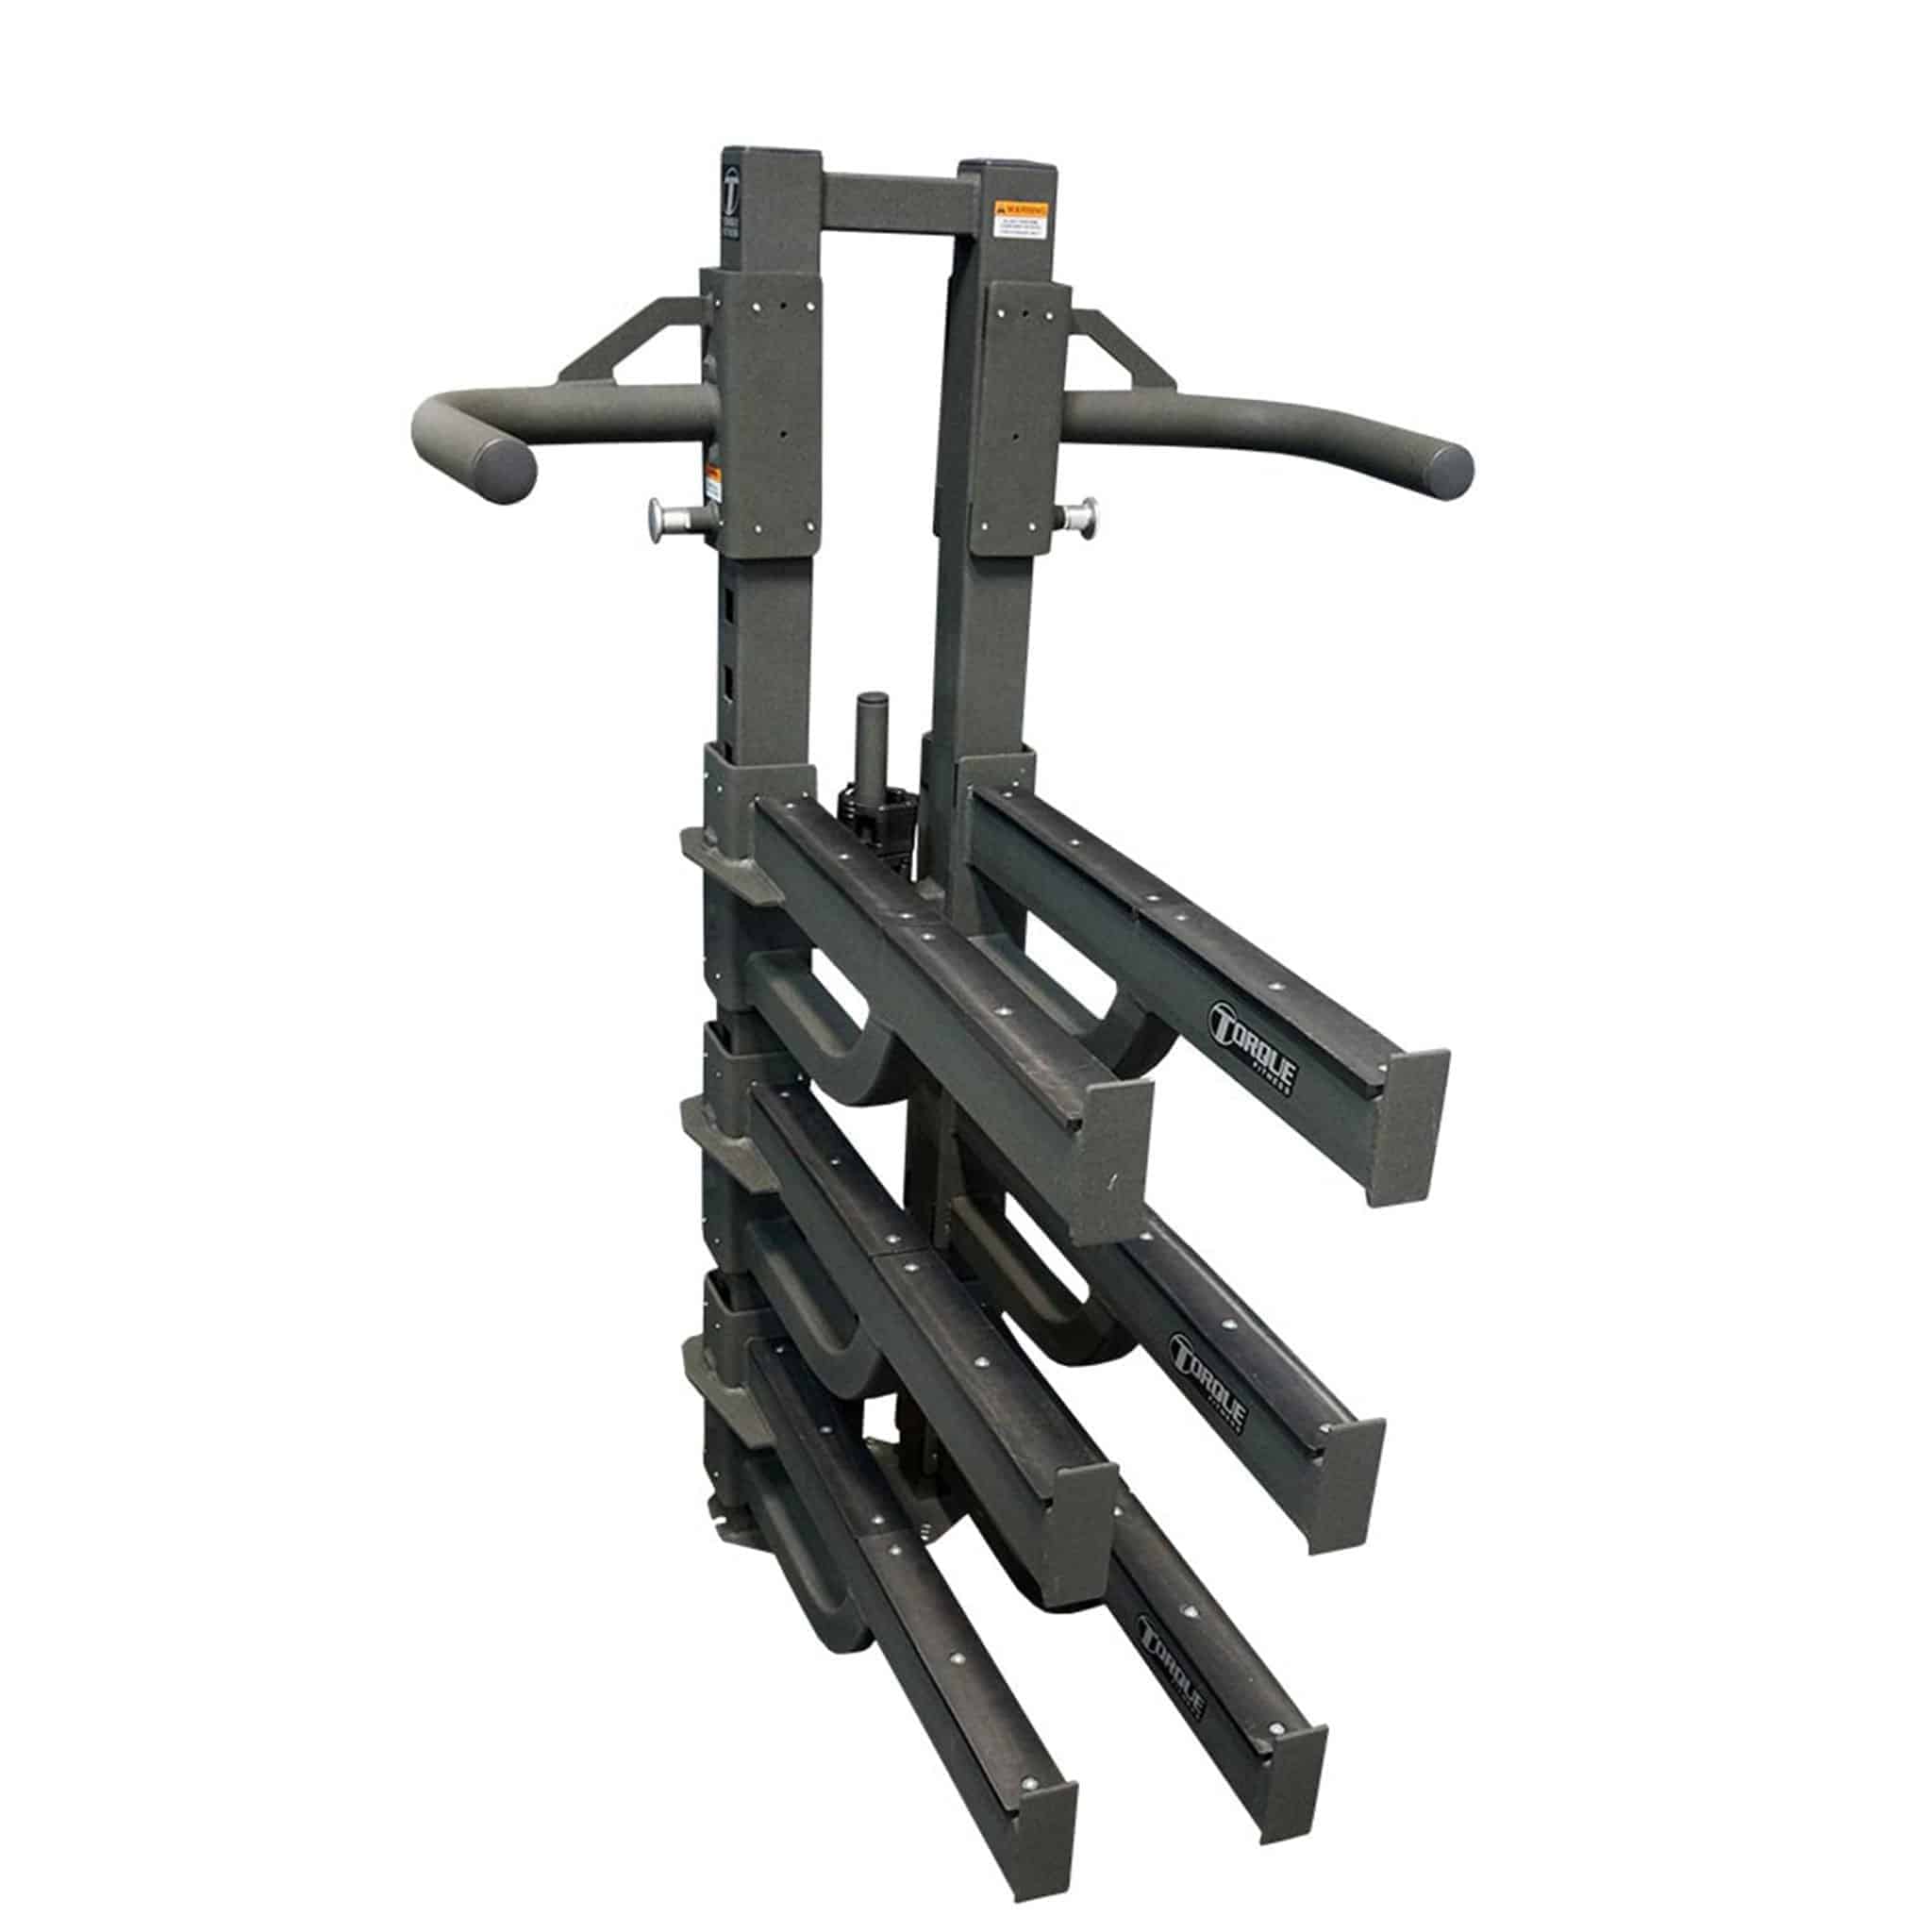 Vertical Accessory Storage Rack